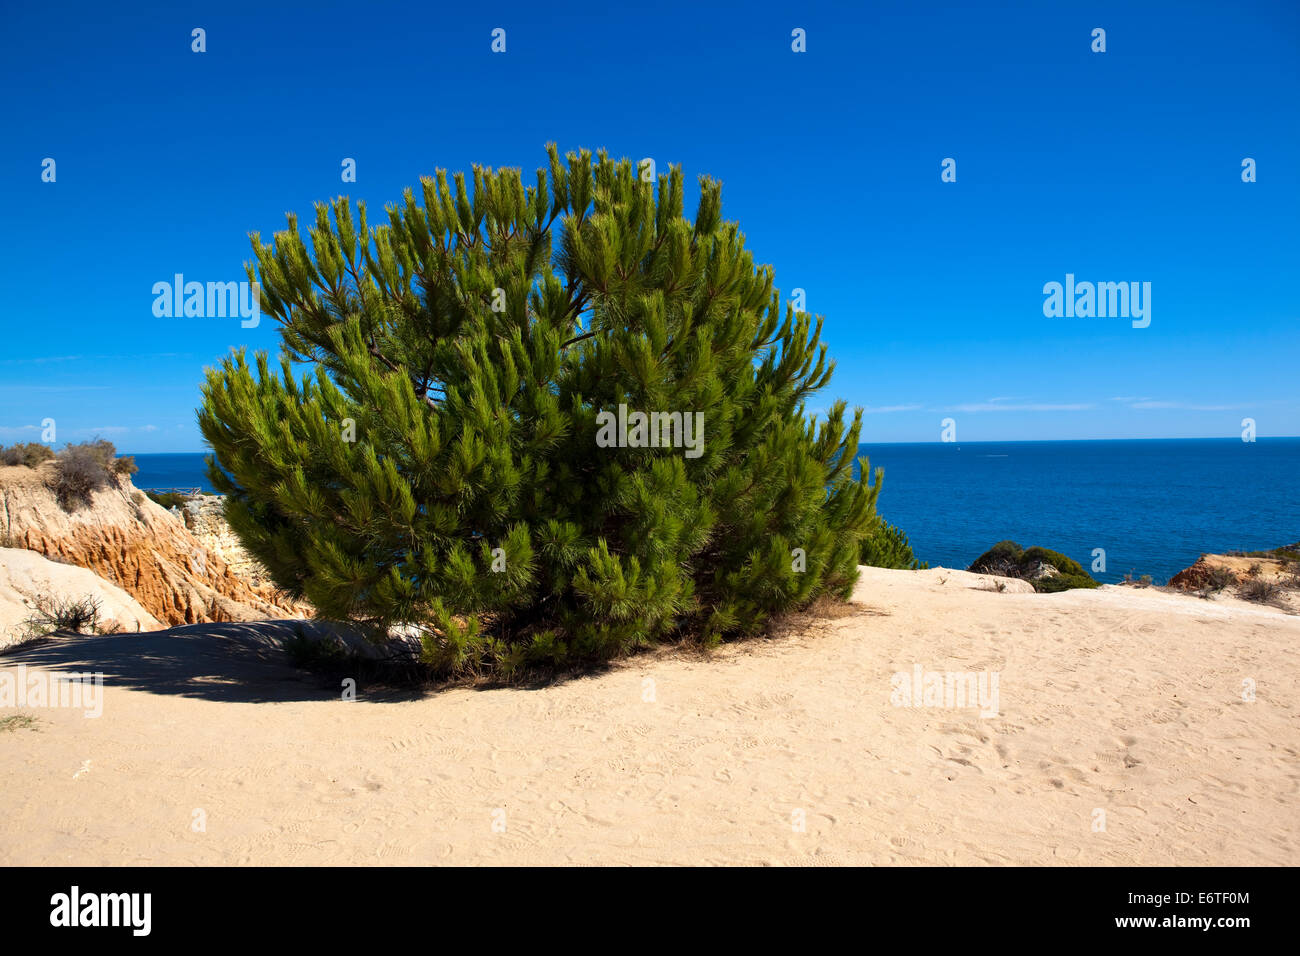 Praia da Marinha, Algarve, beach, Portugal Stock Photo